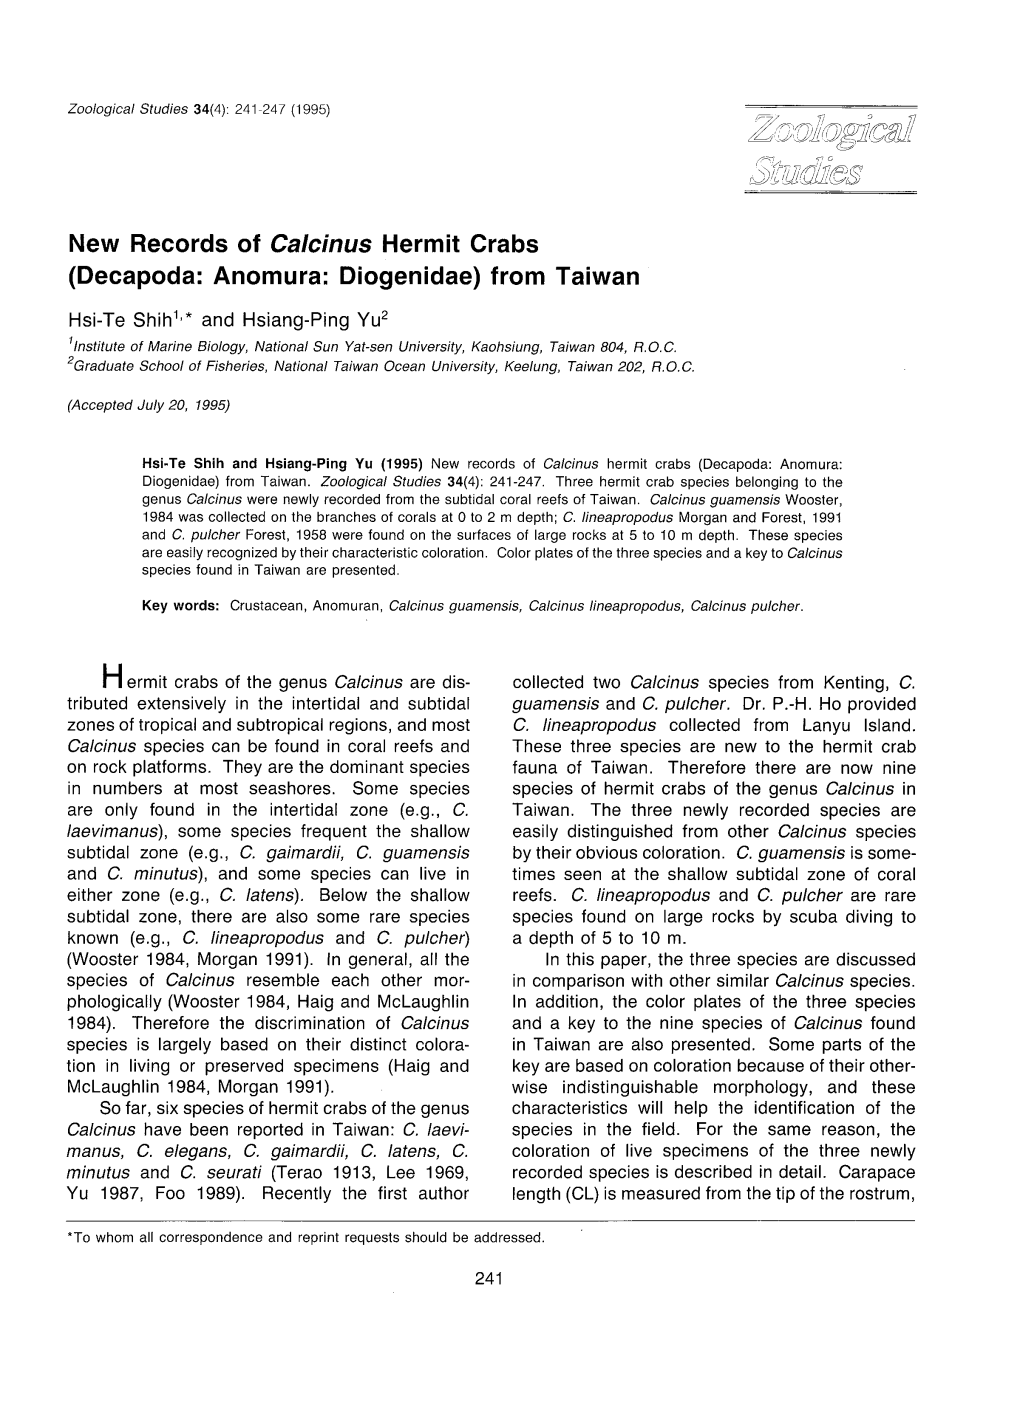 New Records of Calcinus Hermit Crabs (Decapoda: Anomura: Diogenidae) from Taiwan